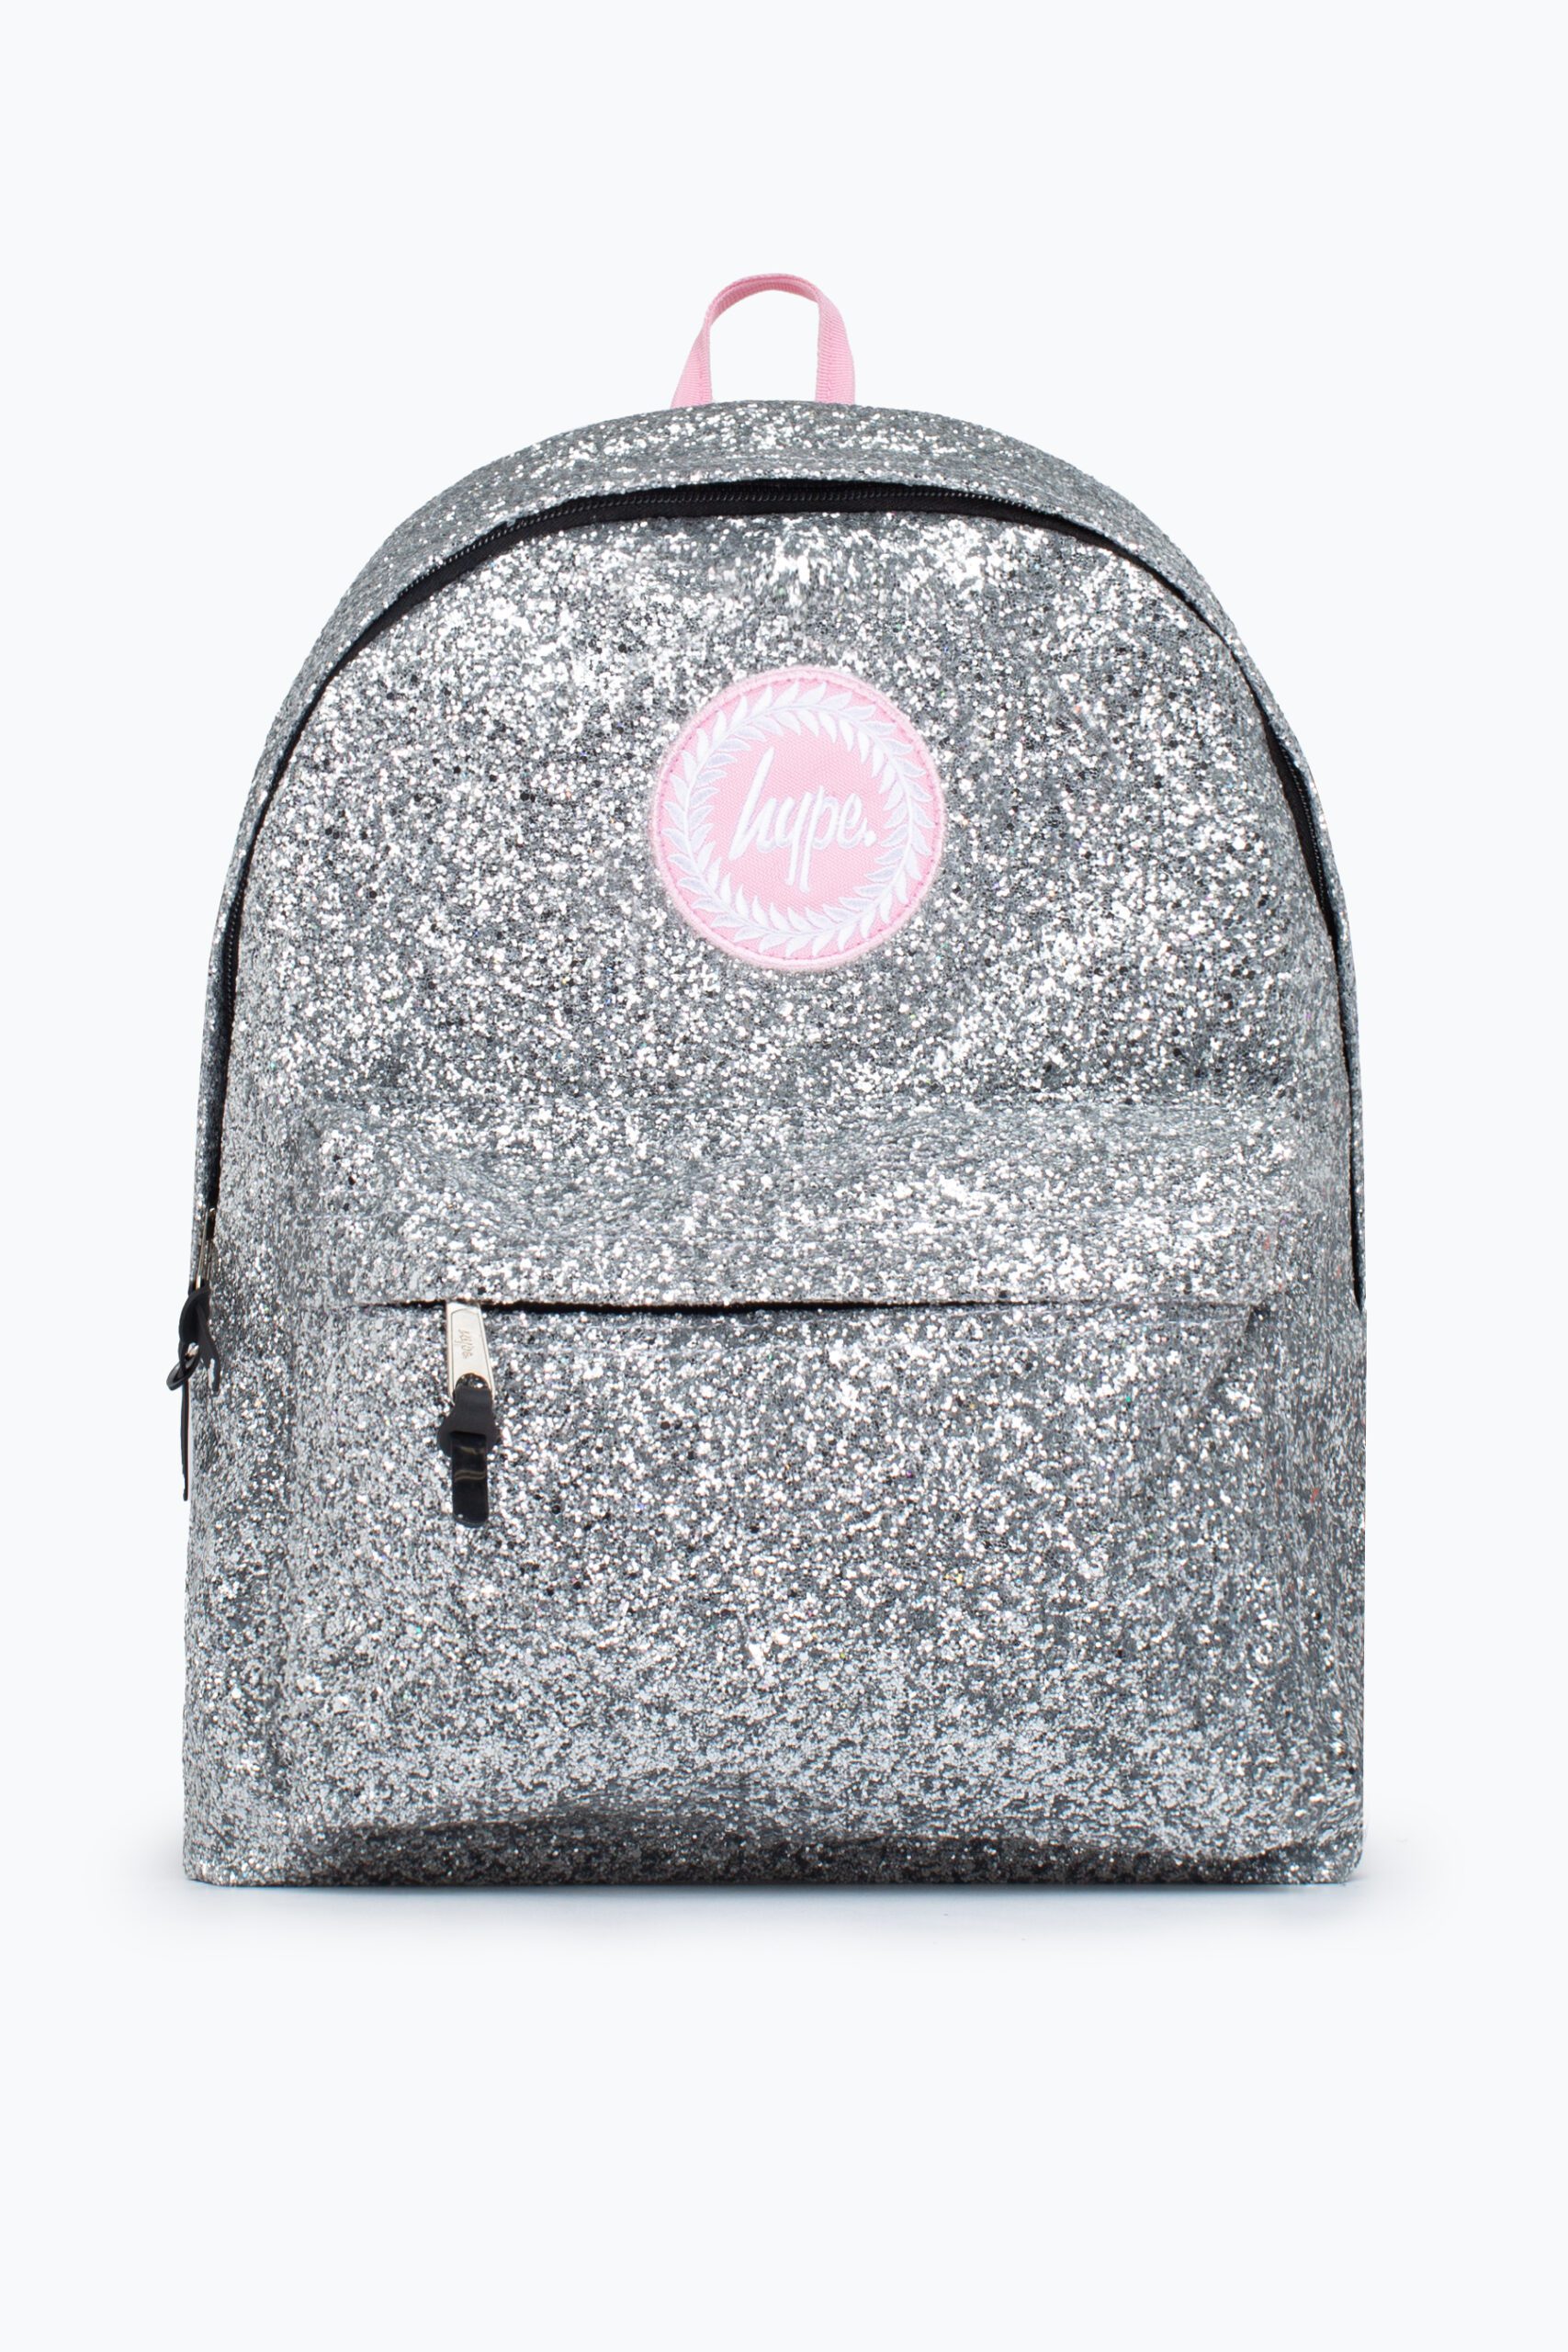 hype silver glitter backpack white background